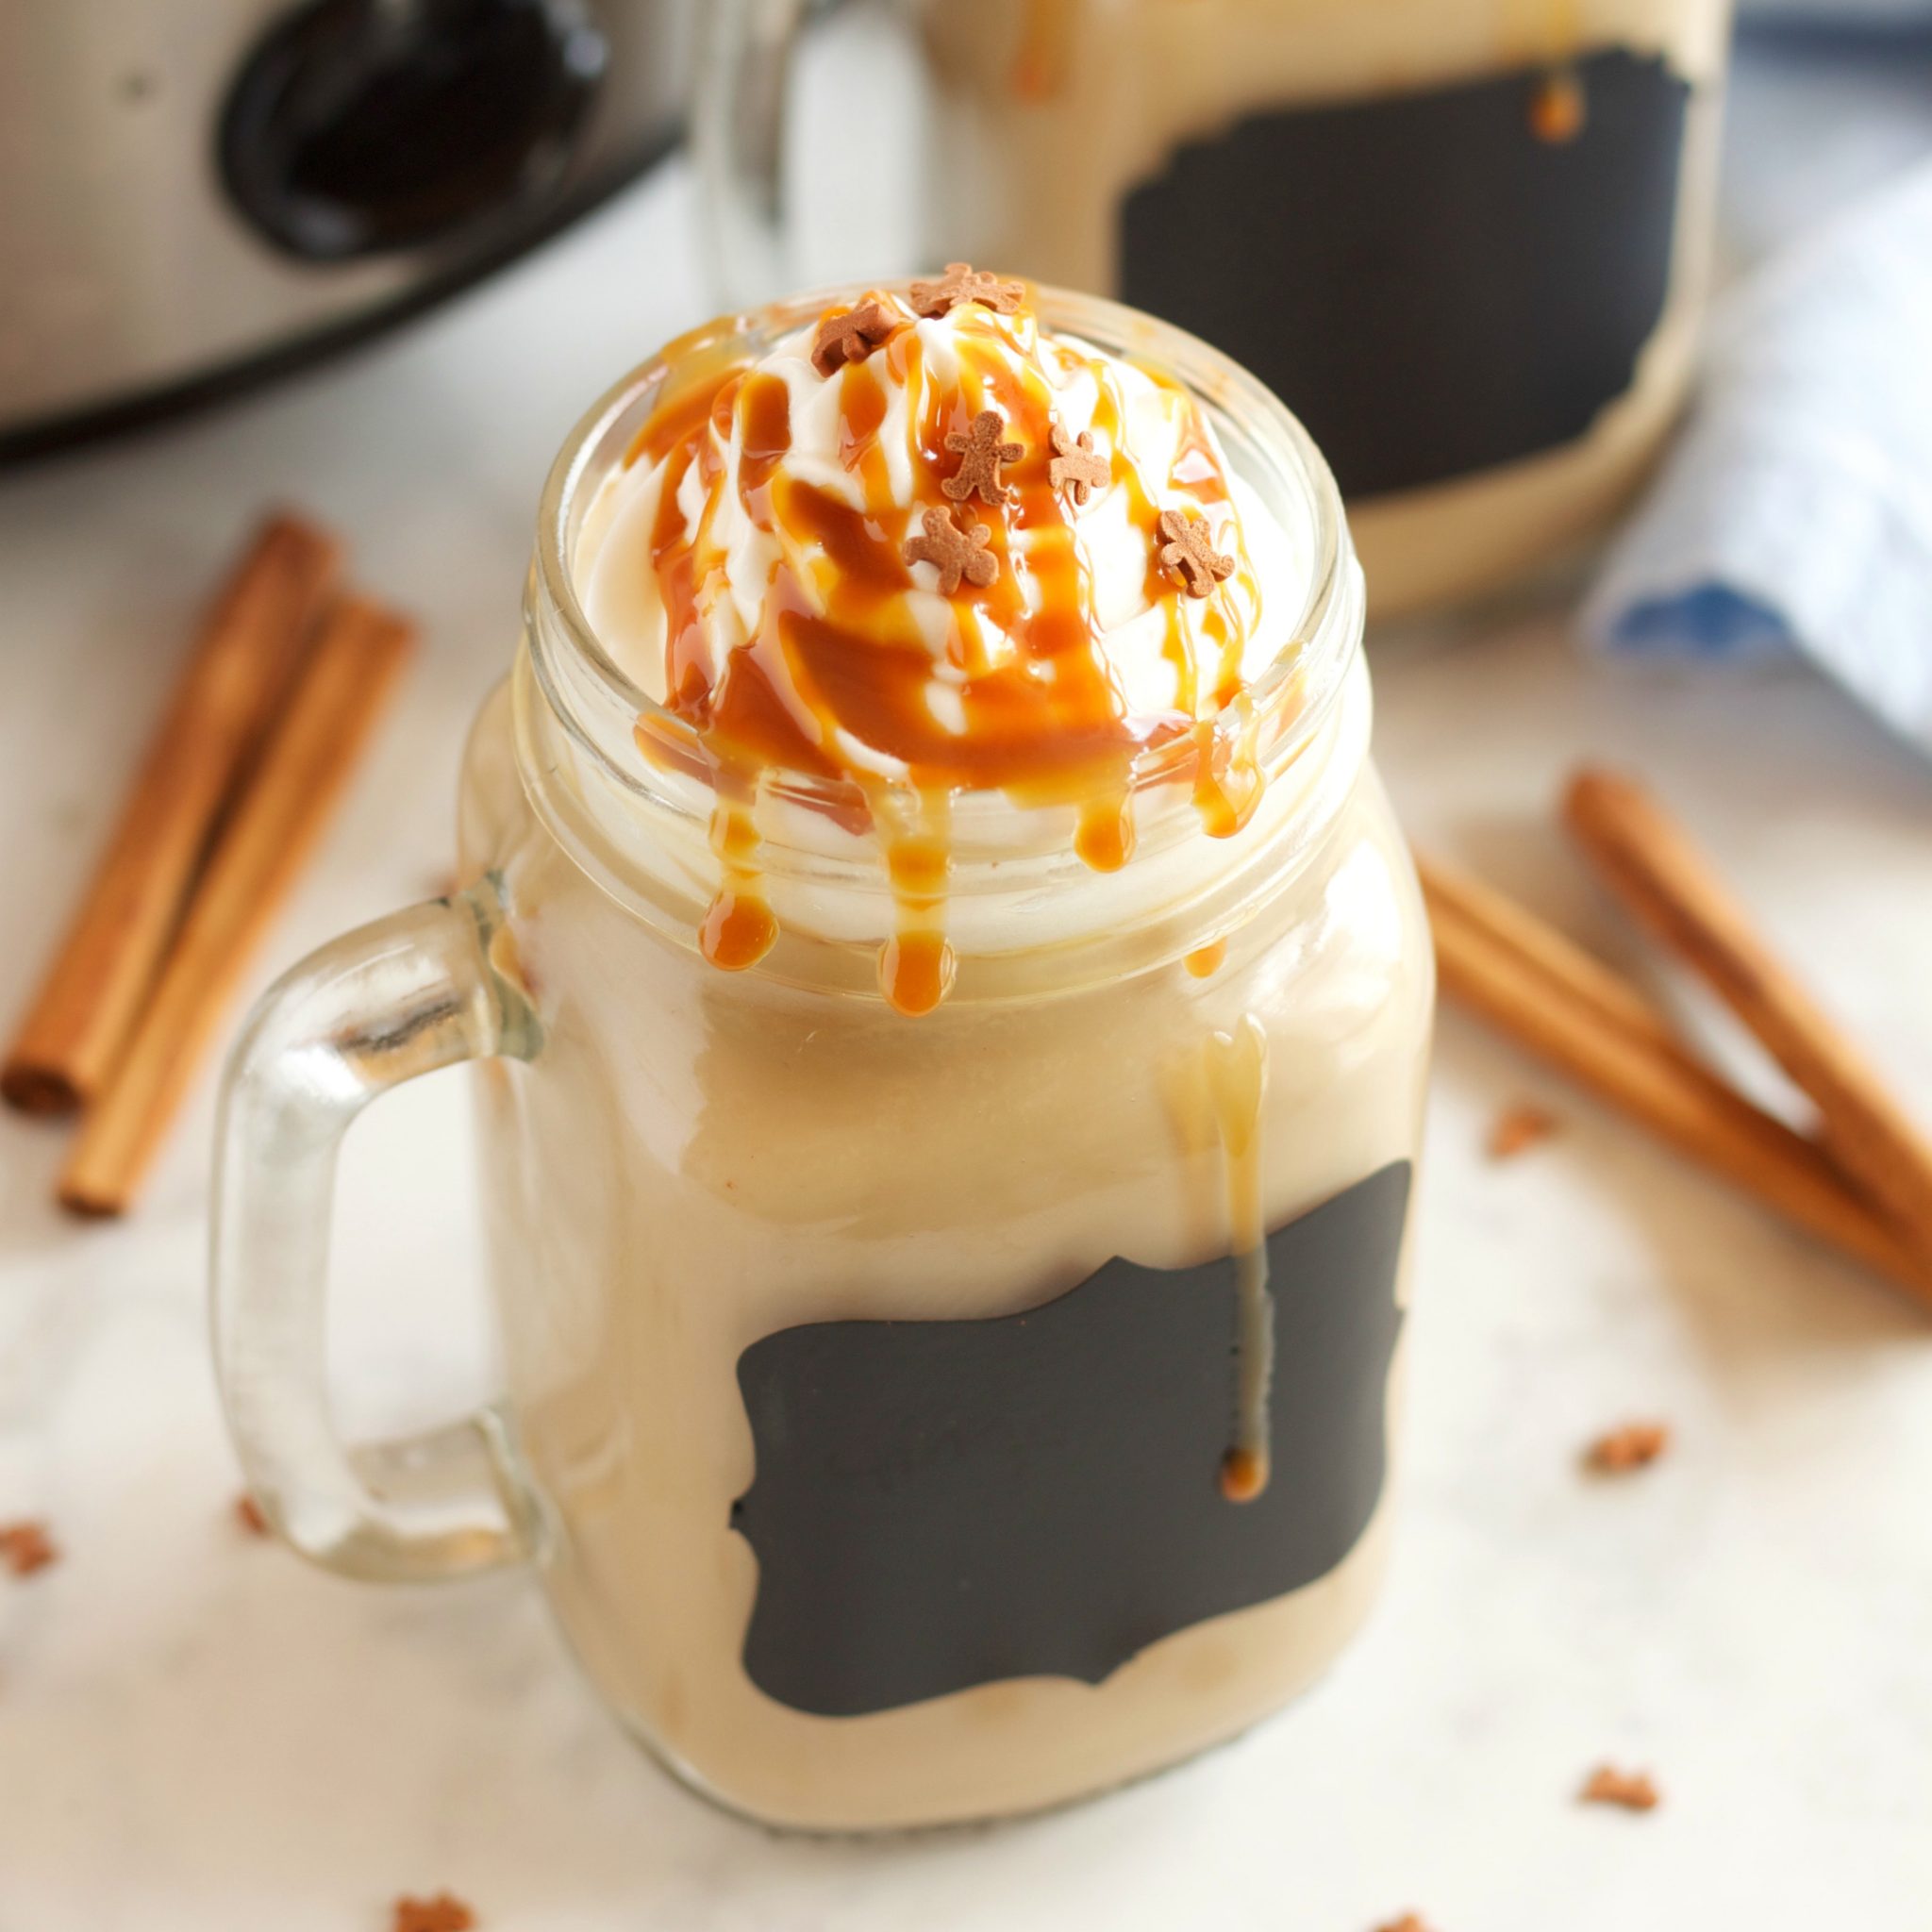 https://thebusybaker.ca/wp-content/uploads/2017/11/slow-cooker-gingerbread-latte-fbig1.jpg